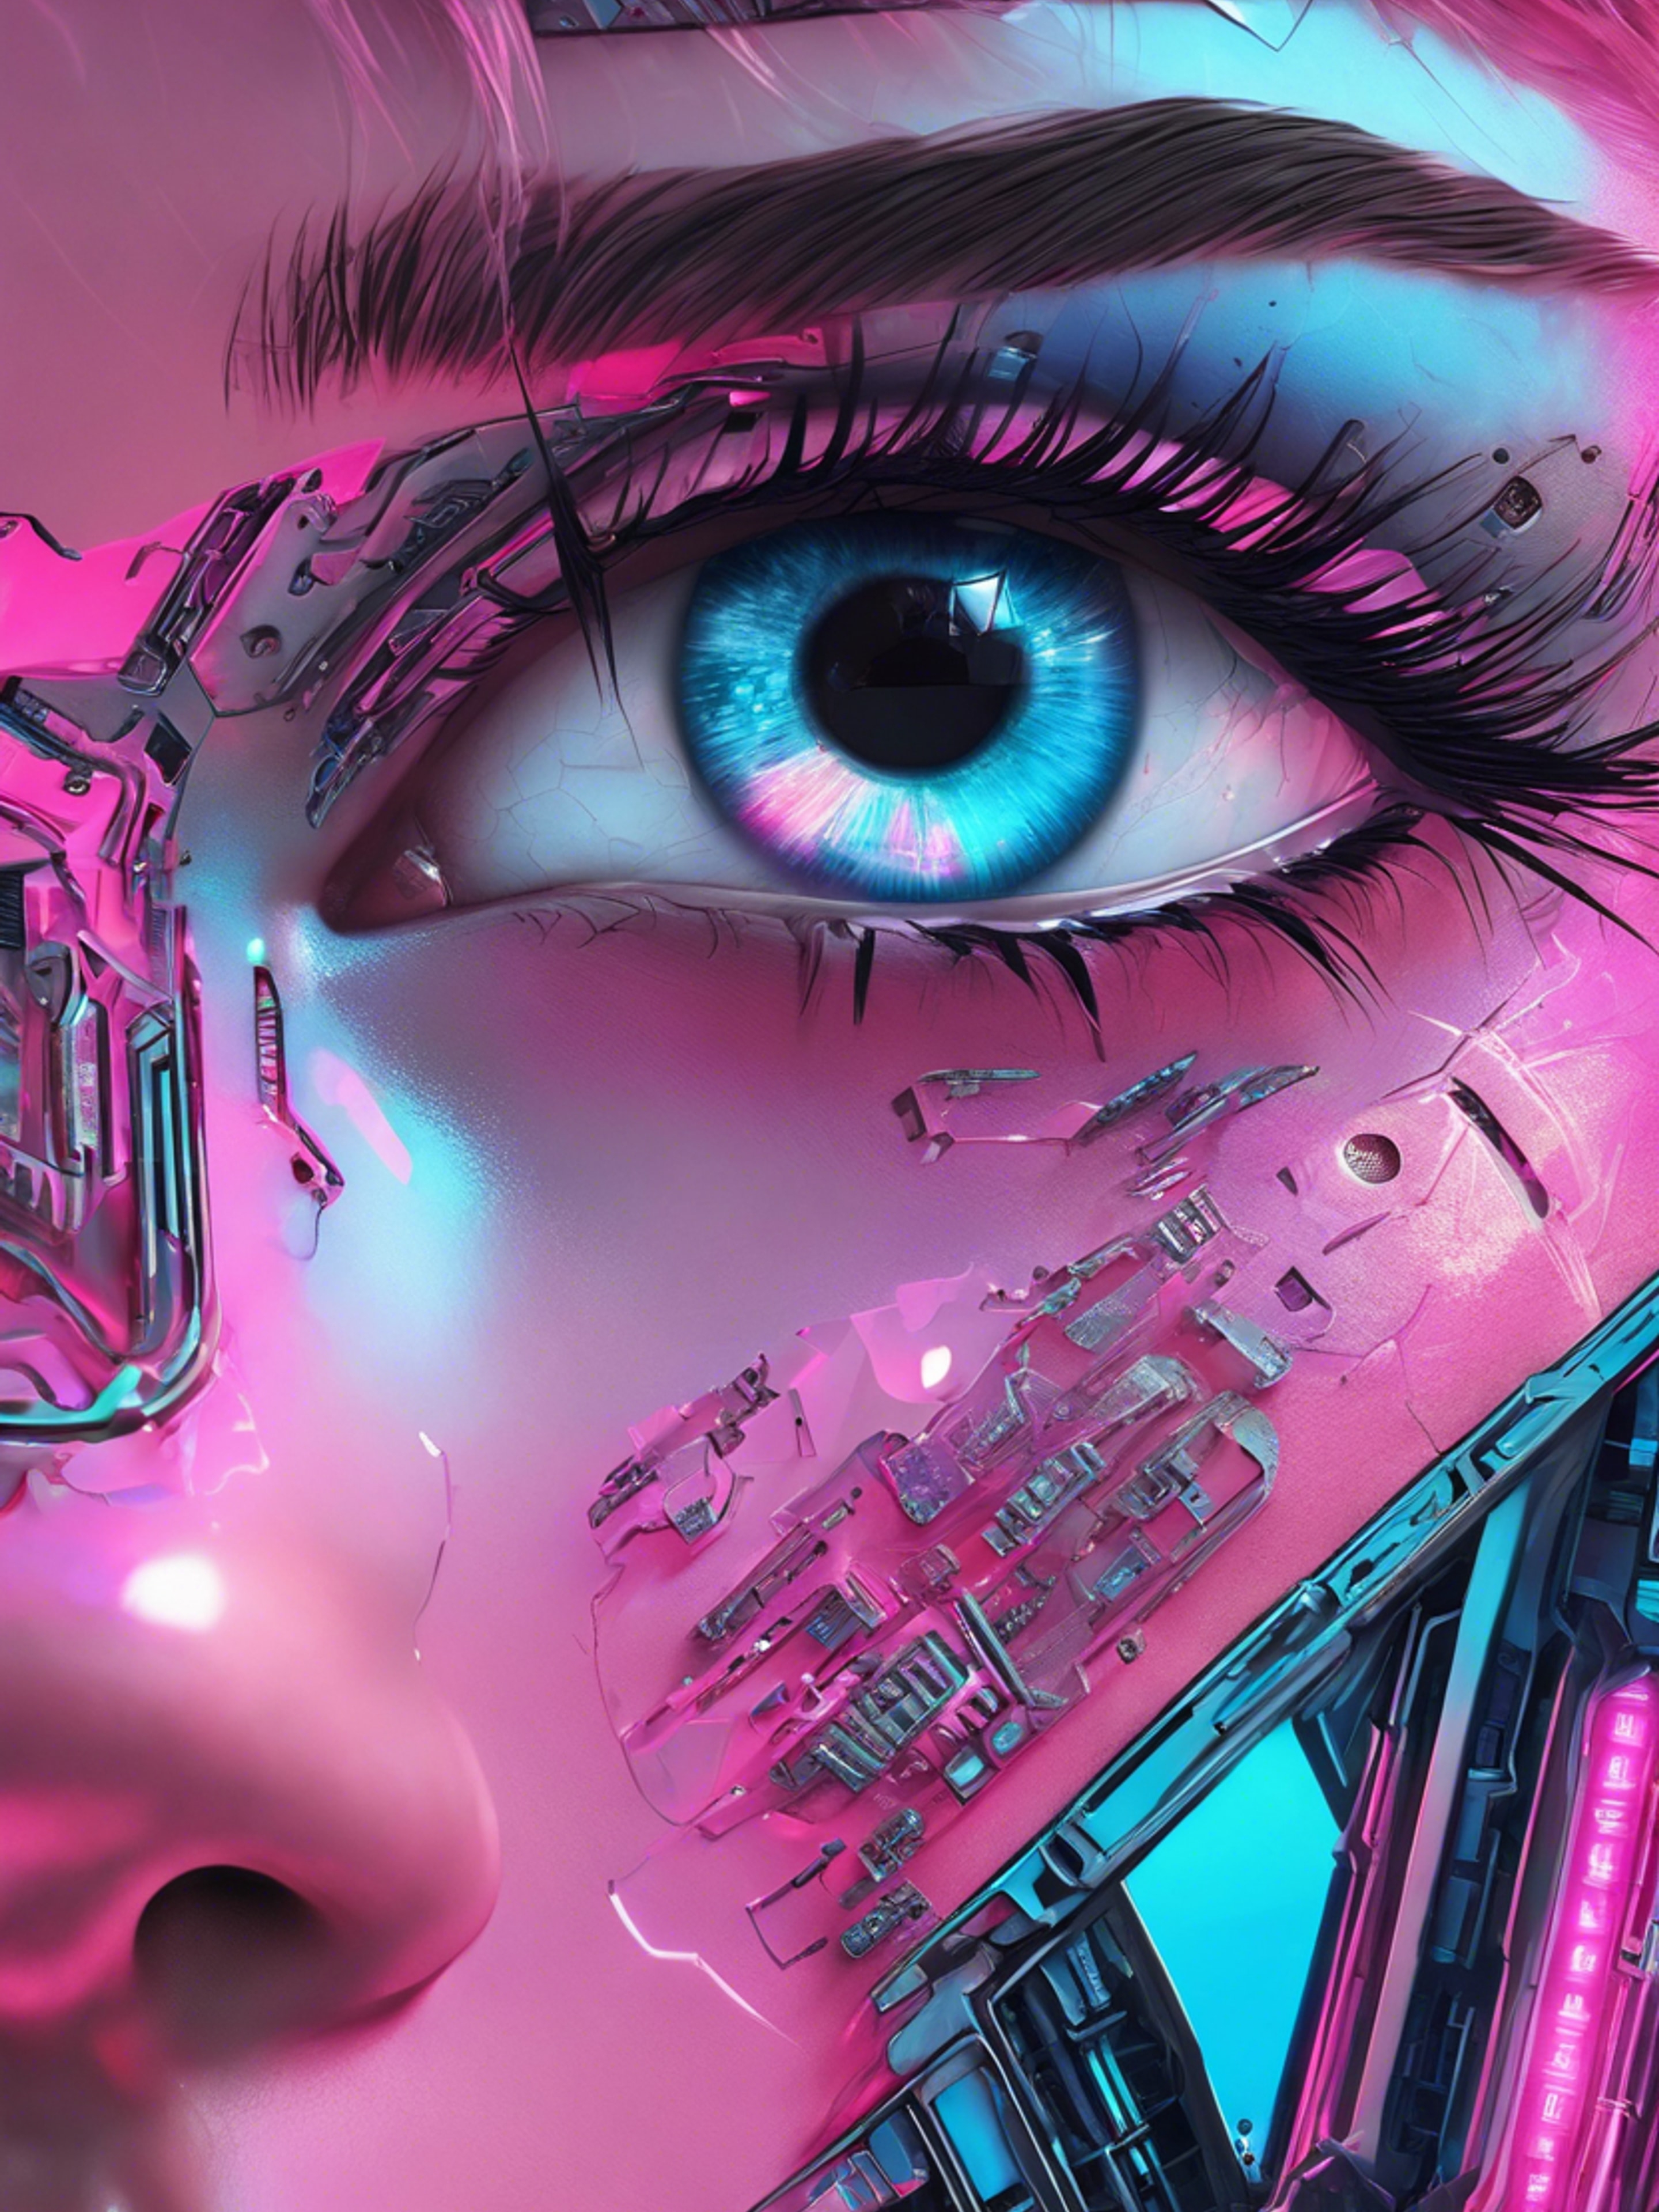 A close-up of a cyberpunk girl's eye, reflecting pink and blue city lights. Wallpaper[805009a14d1a4c10afac]